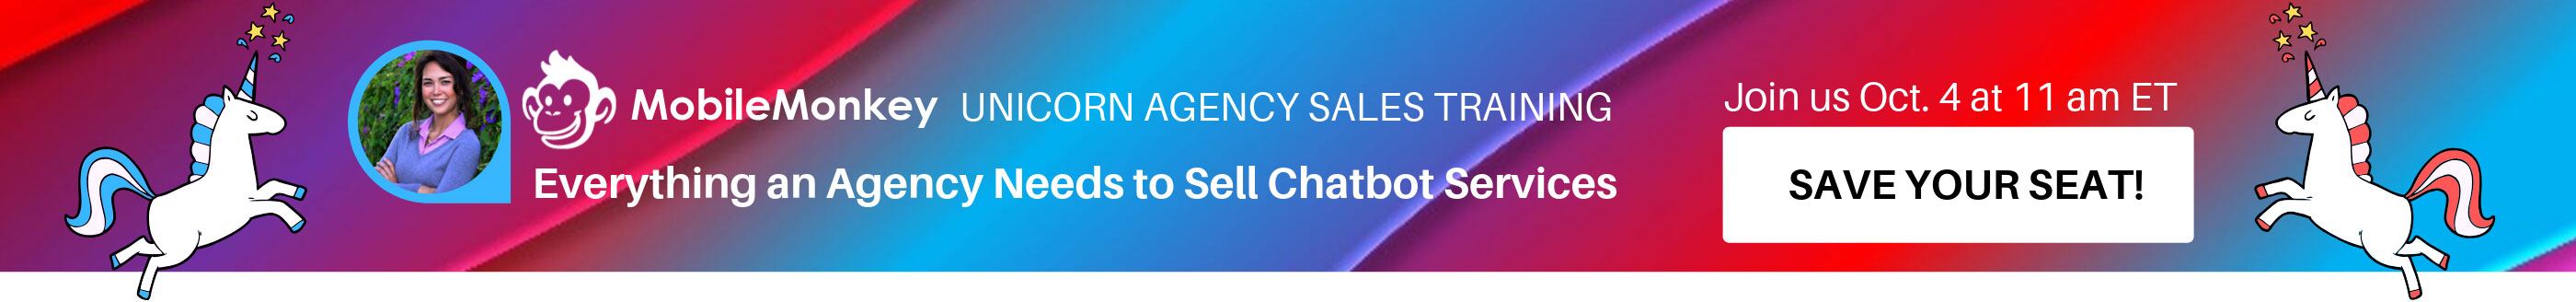 WSI Unicorn Agency Chatbot Sales Webinar Banner